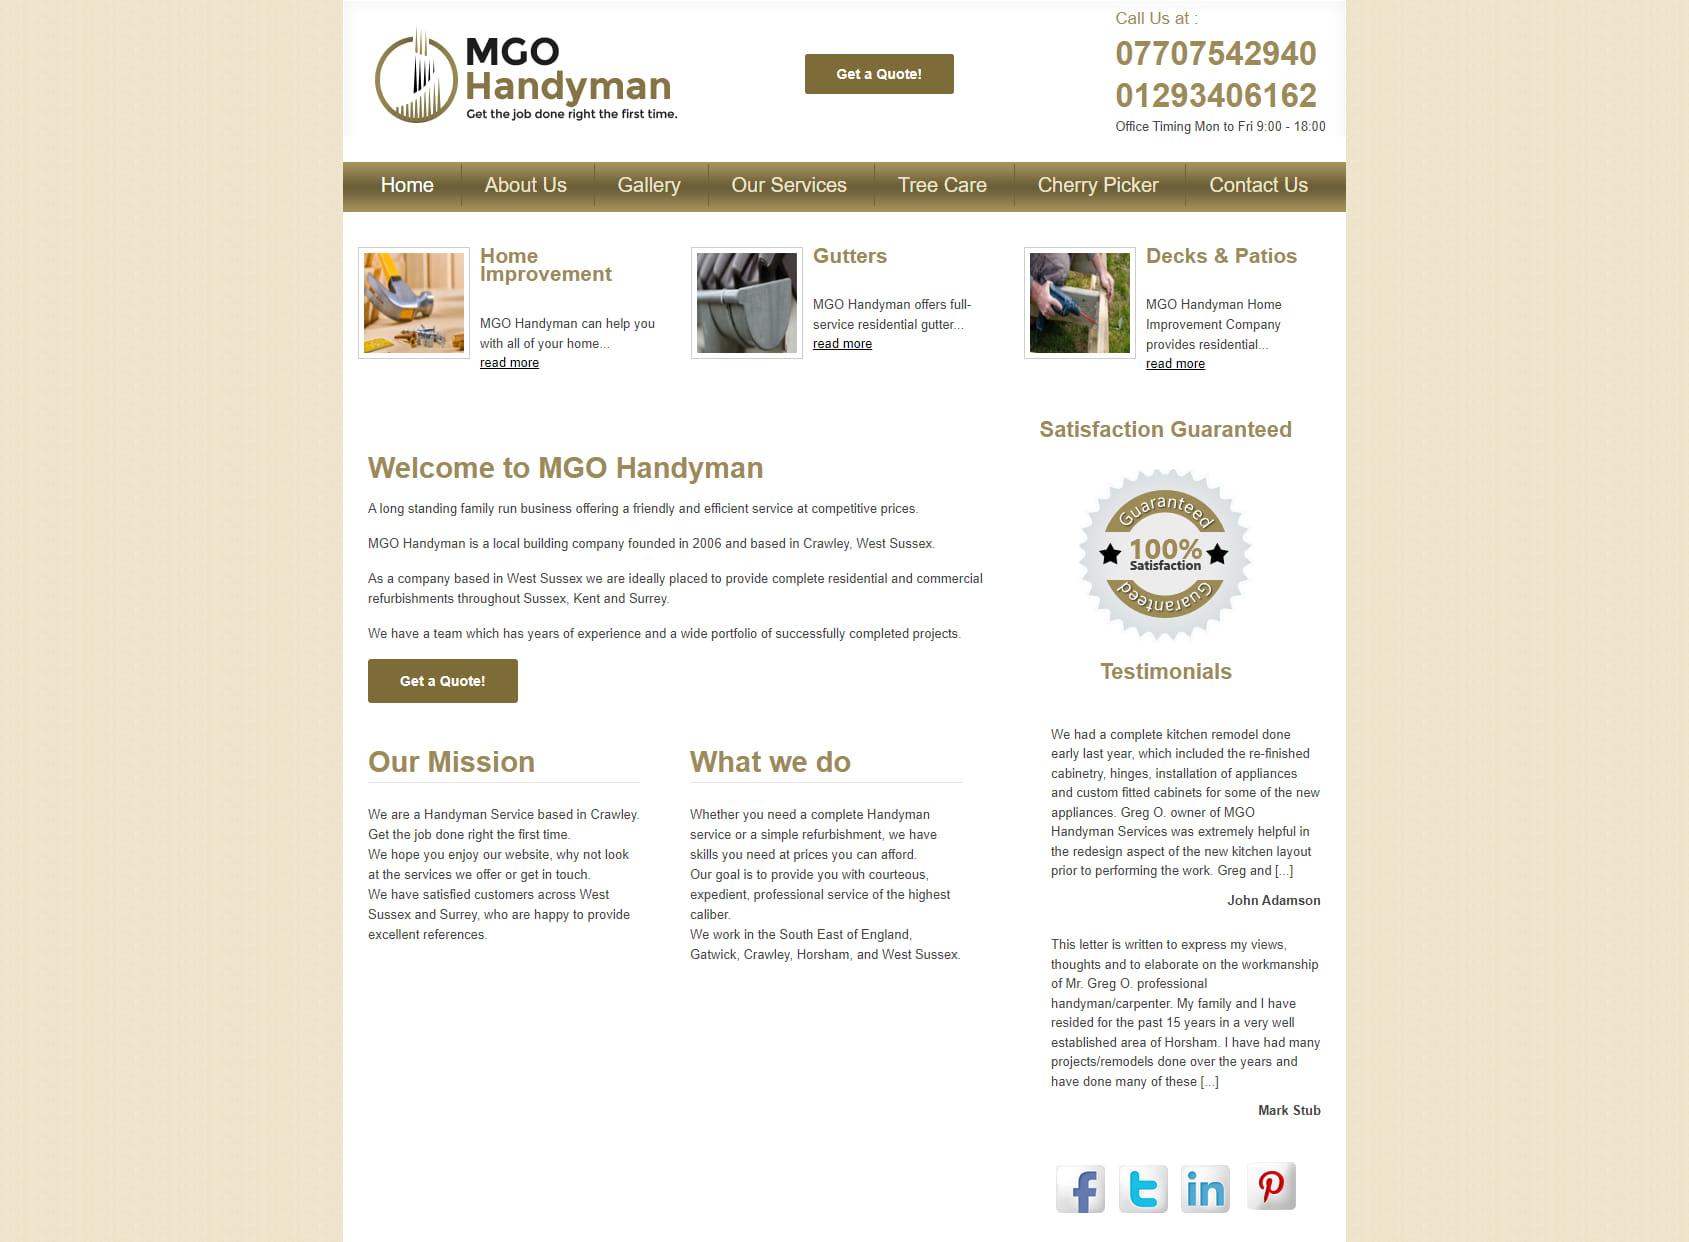 MGO Handyman Services